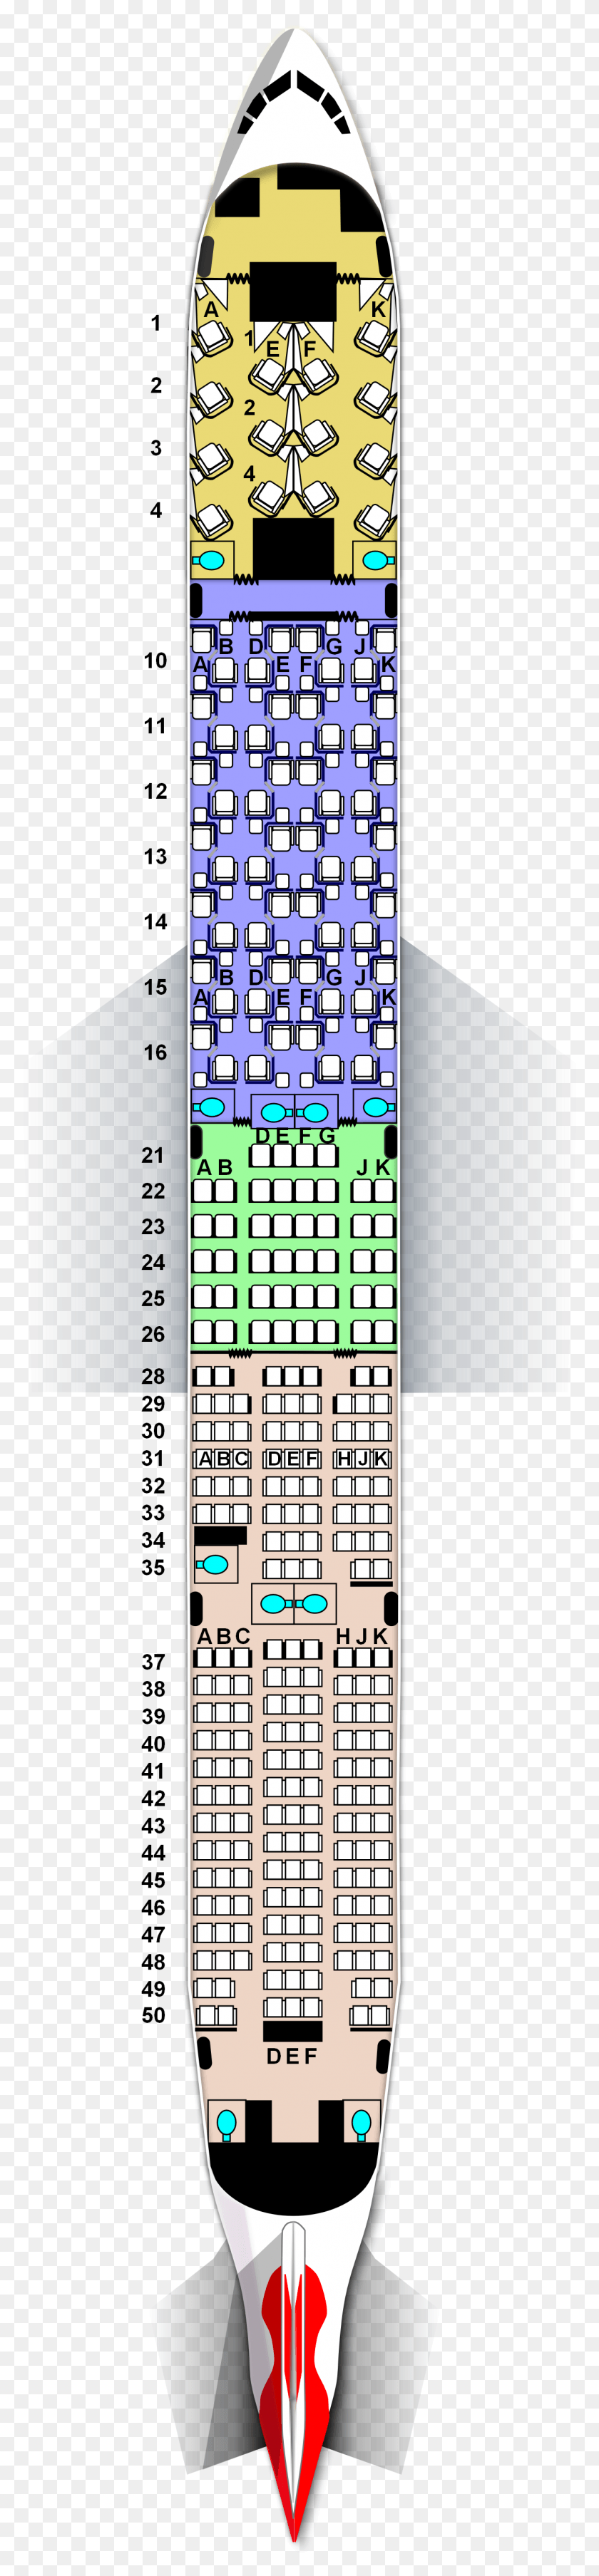 1276x5817 British Airways Boeing 777 300Er Seat Map Electronics, Word, Game, Crossword Puzzle Hd Png Скачать